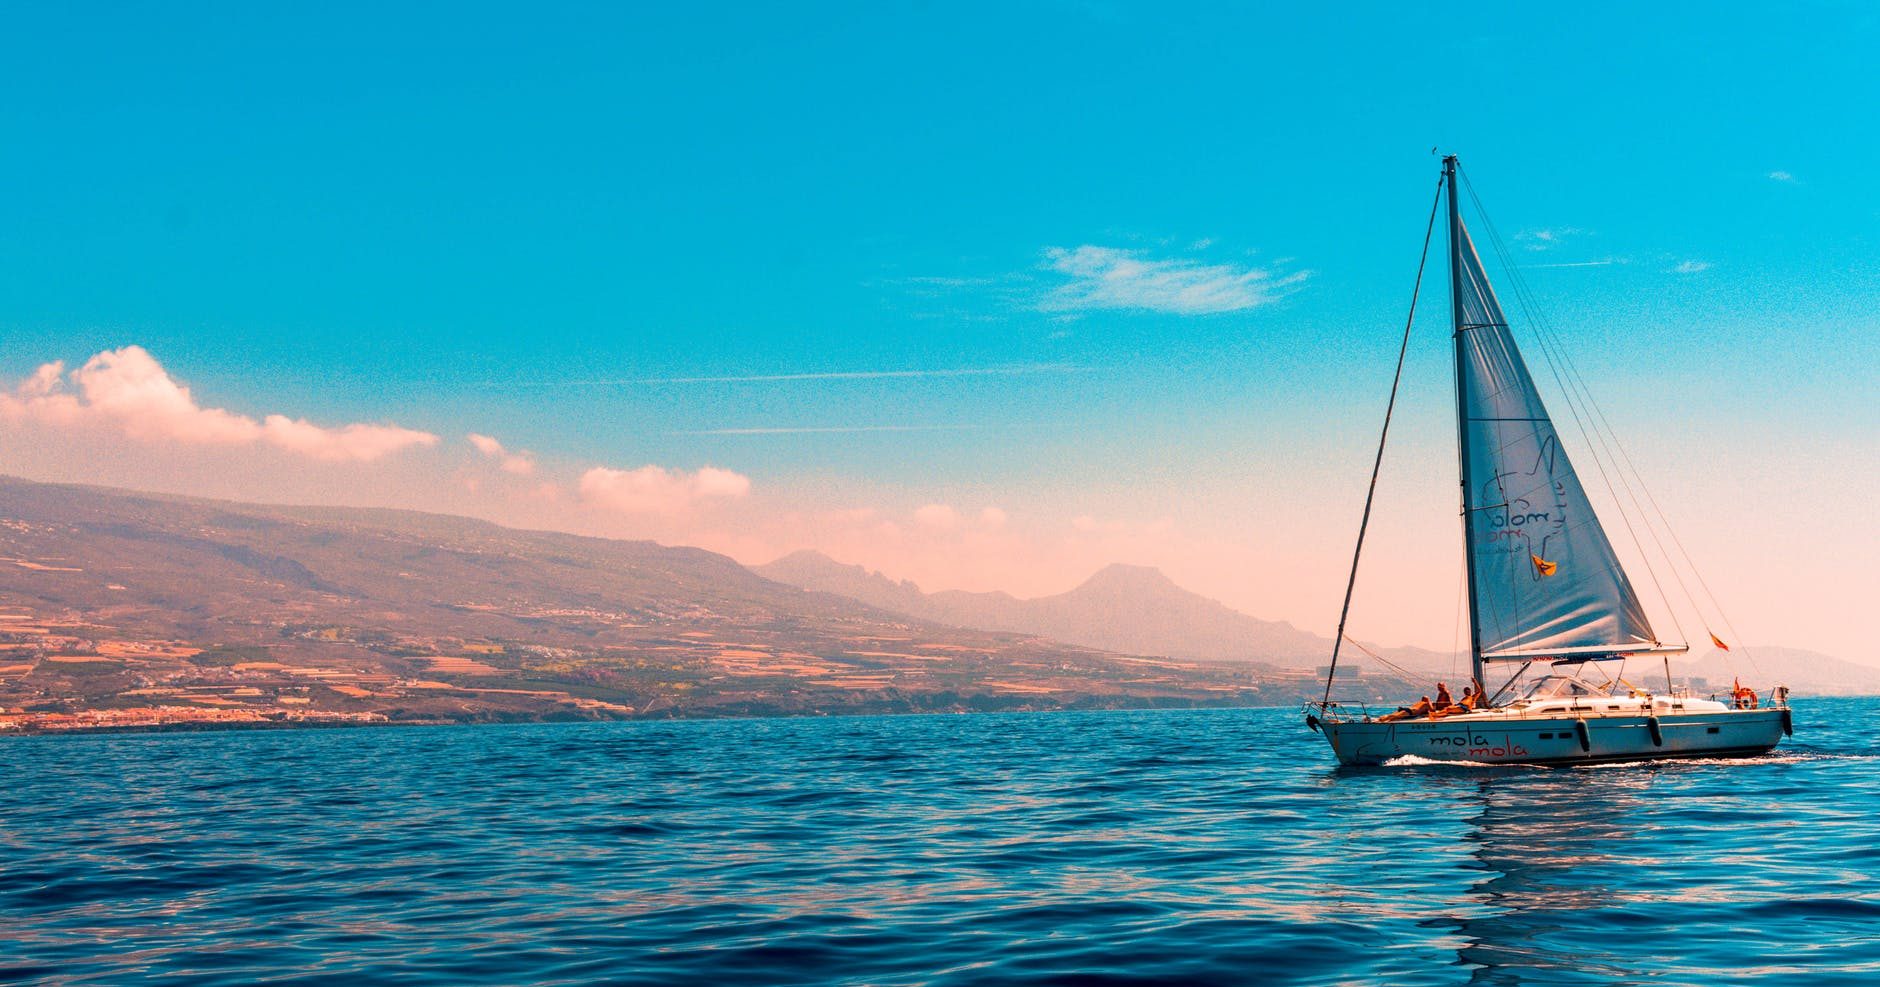 sailboat sailing on water near island